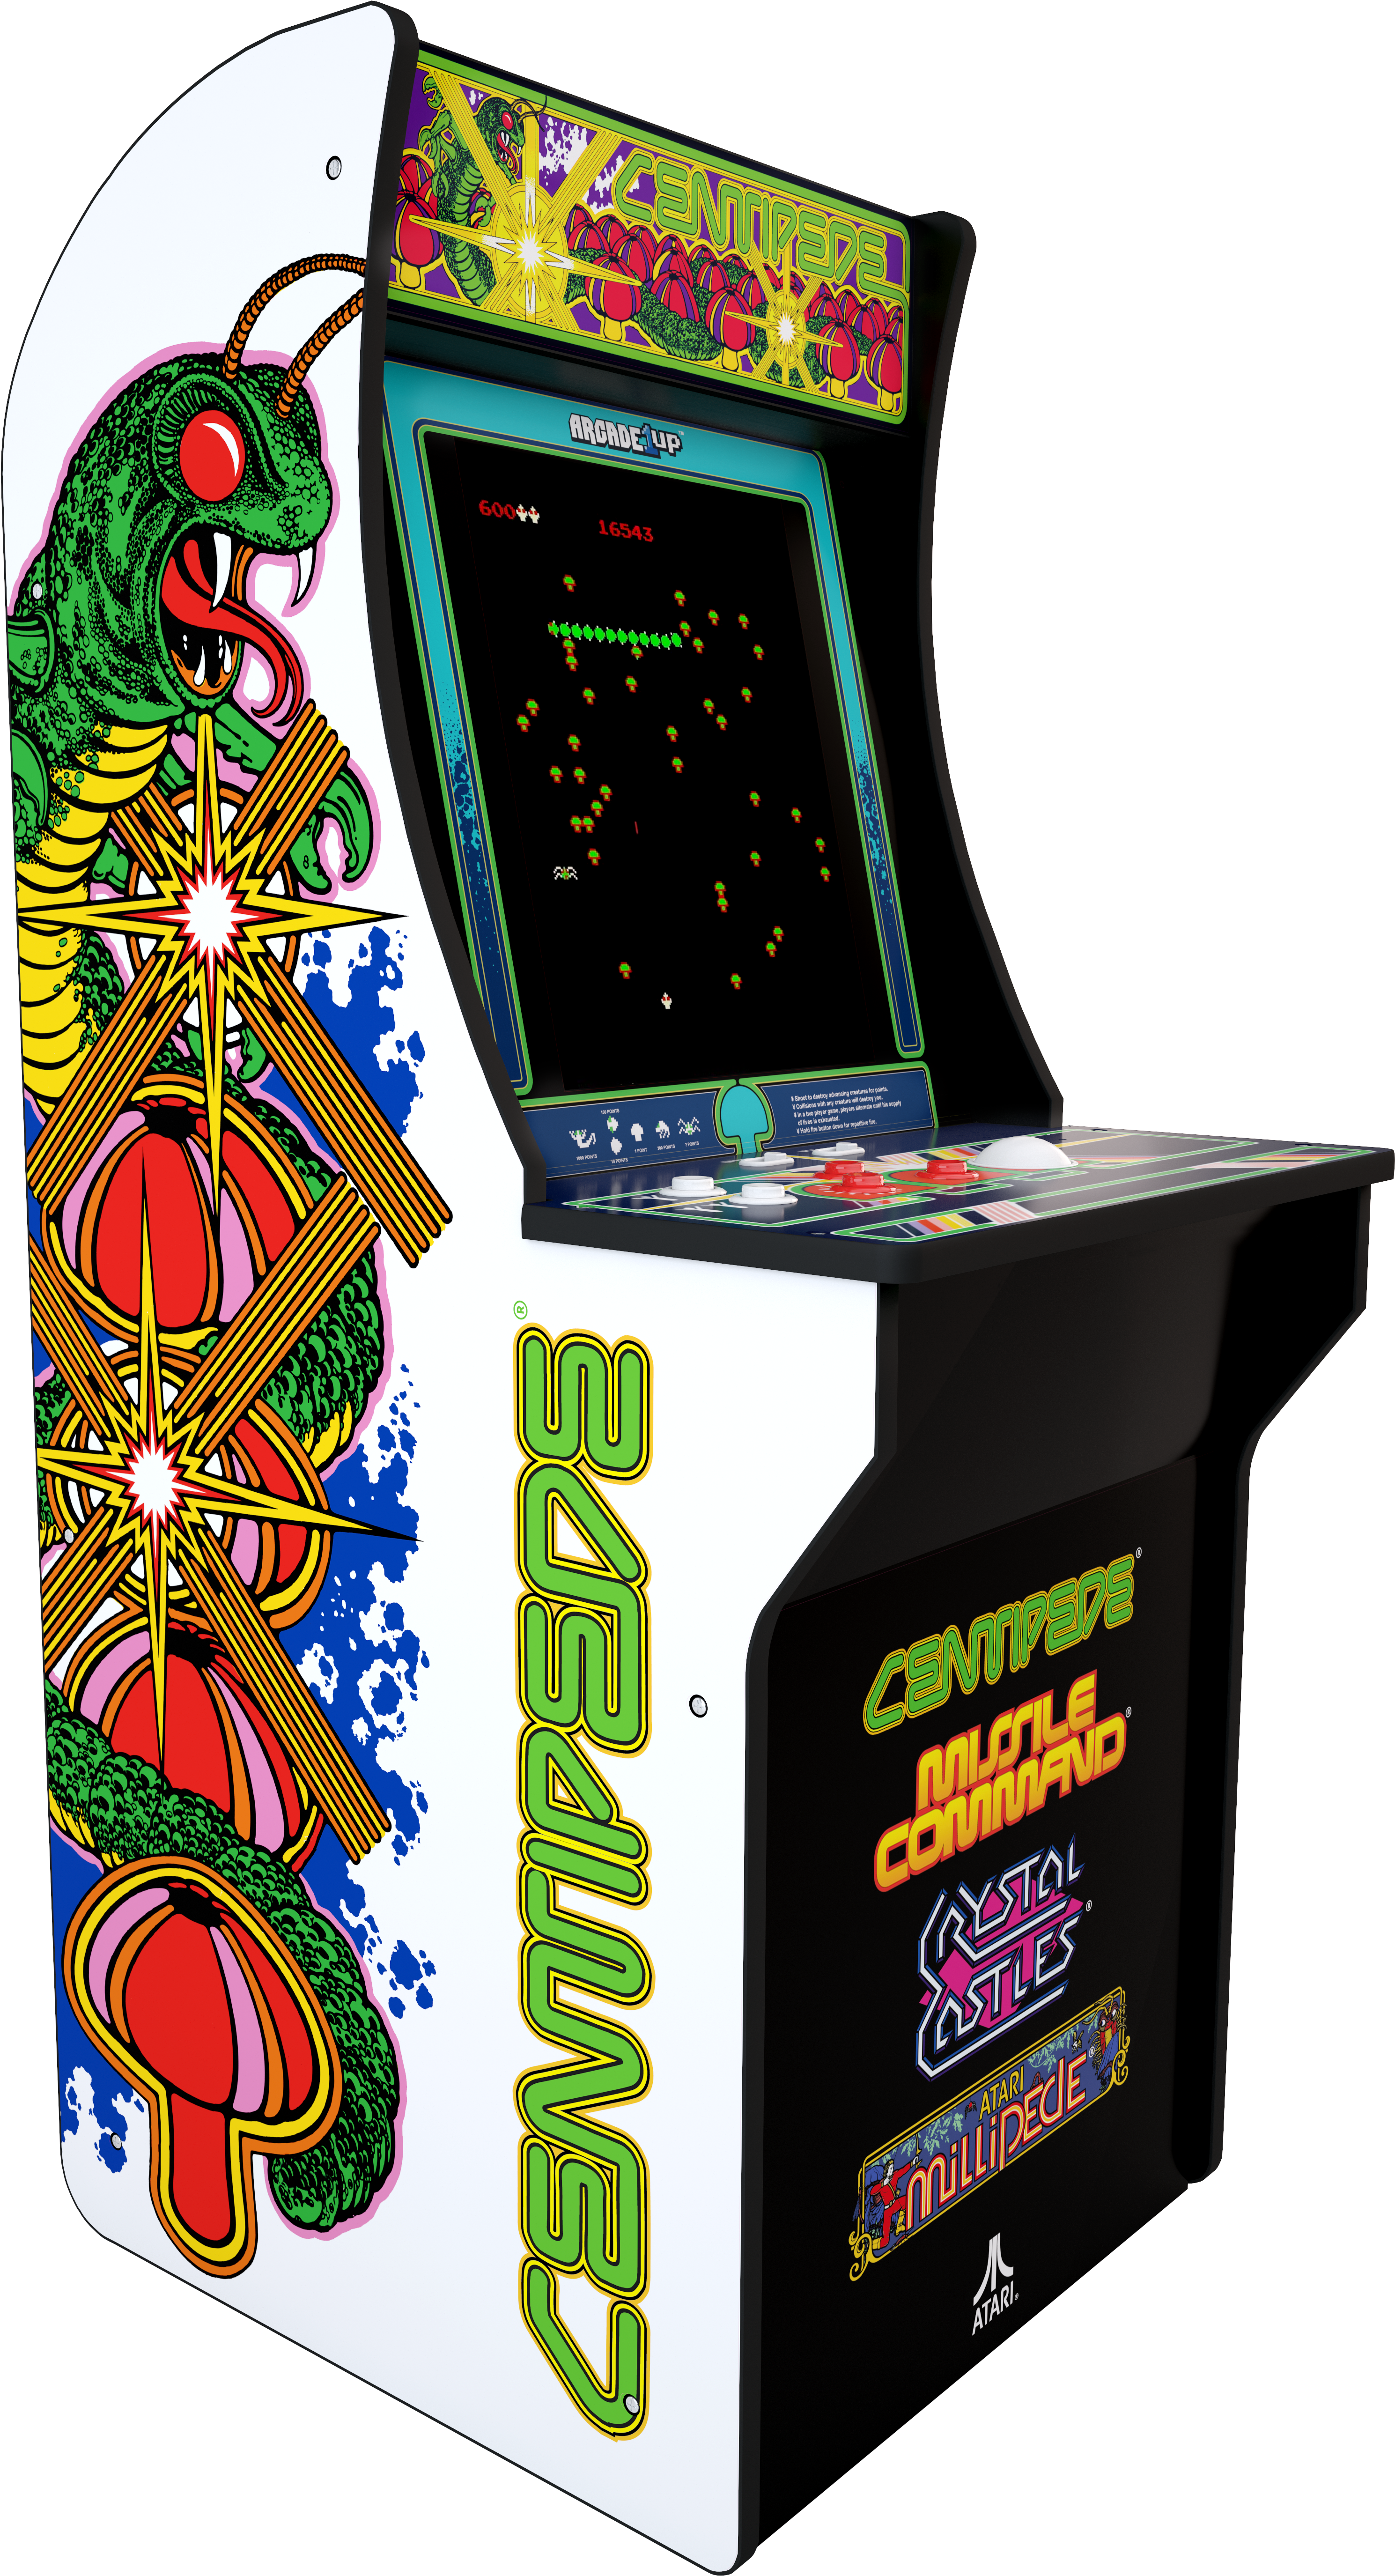 Arcade1up Centipede Machine, 4ft - Arcade1up Centipede Machine, 4ft (4000x6000)